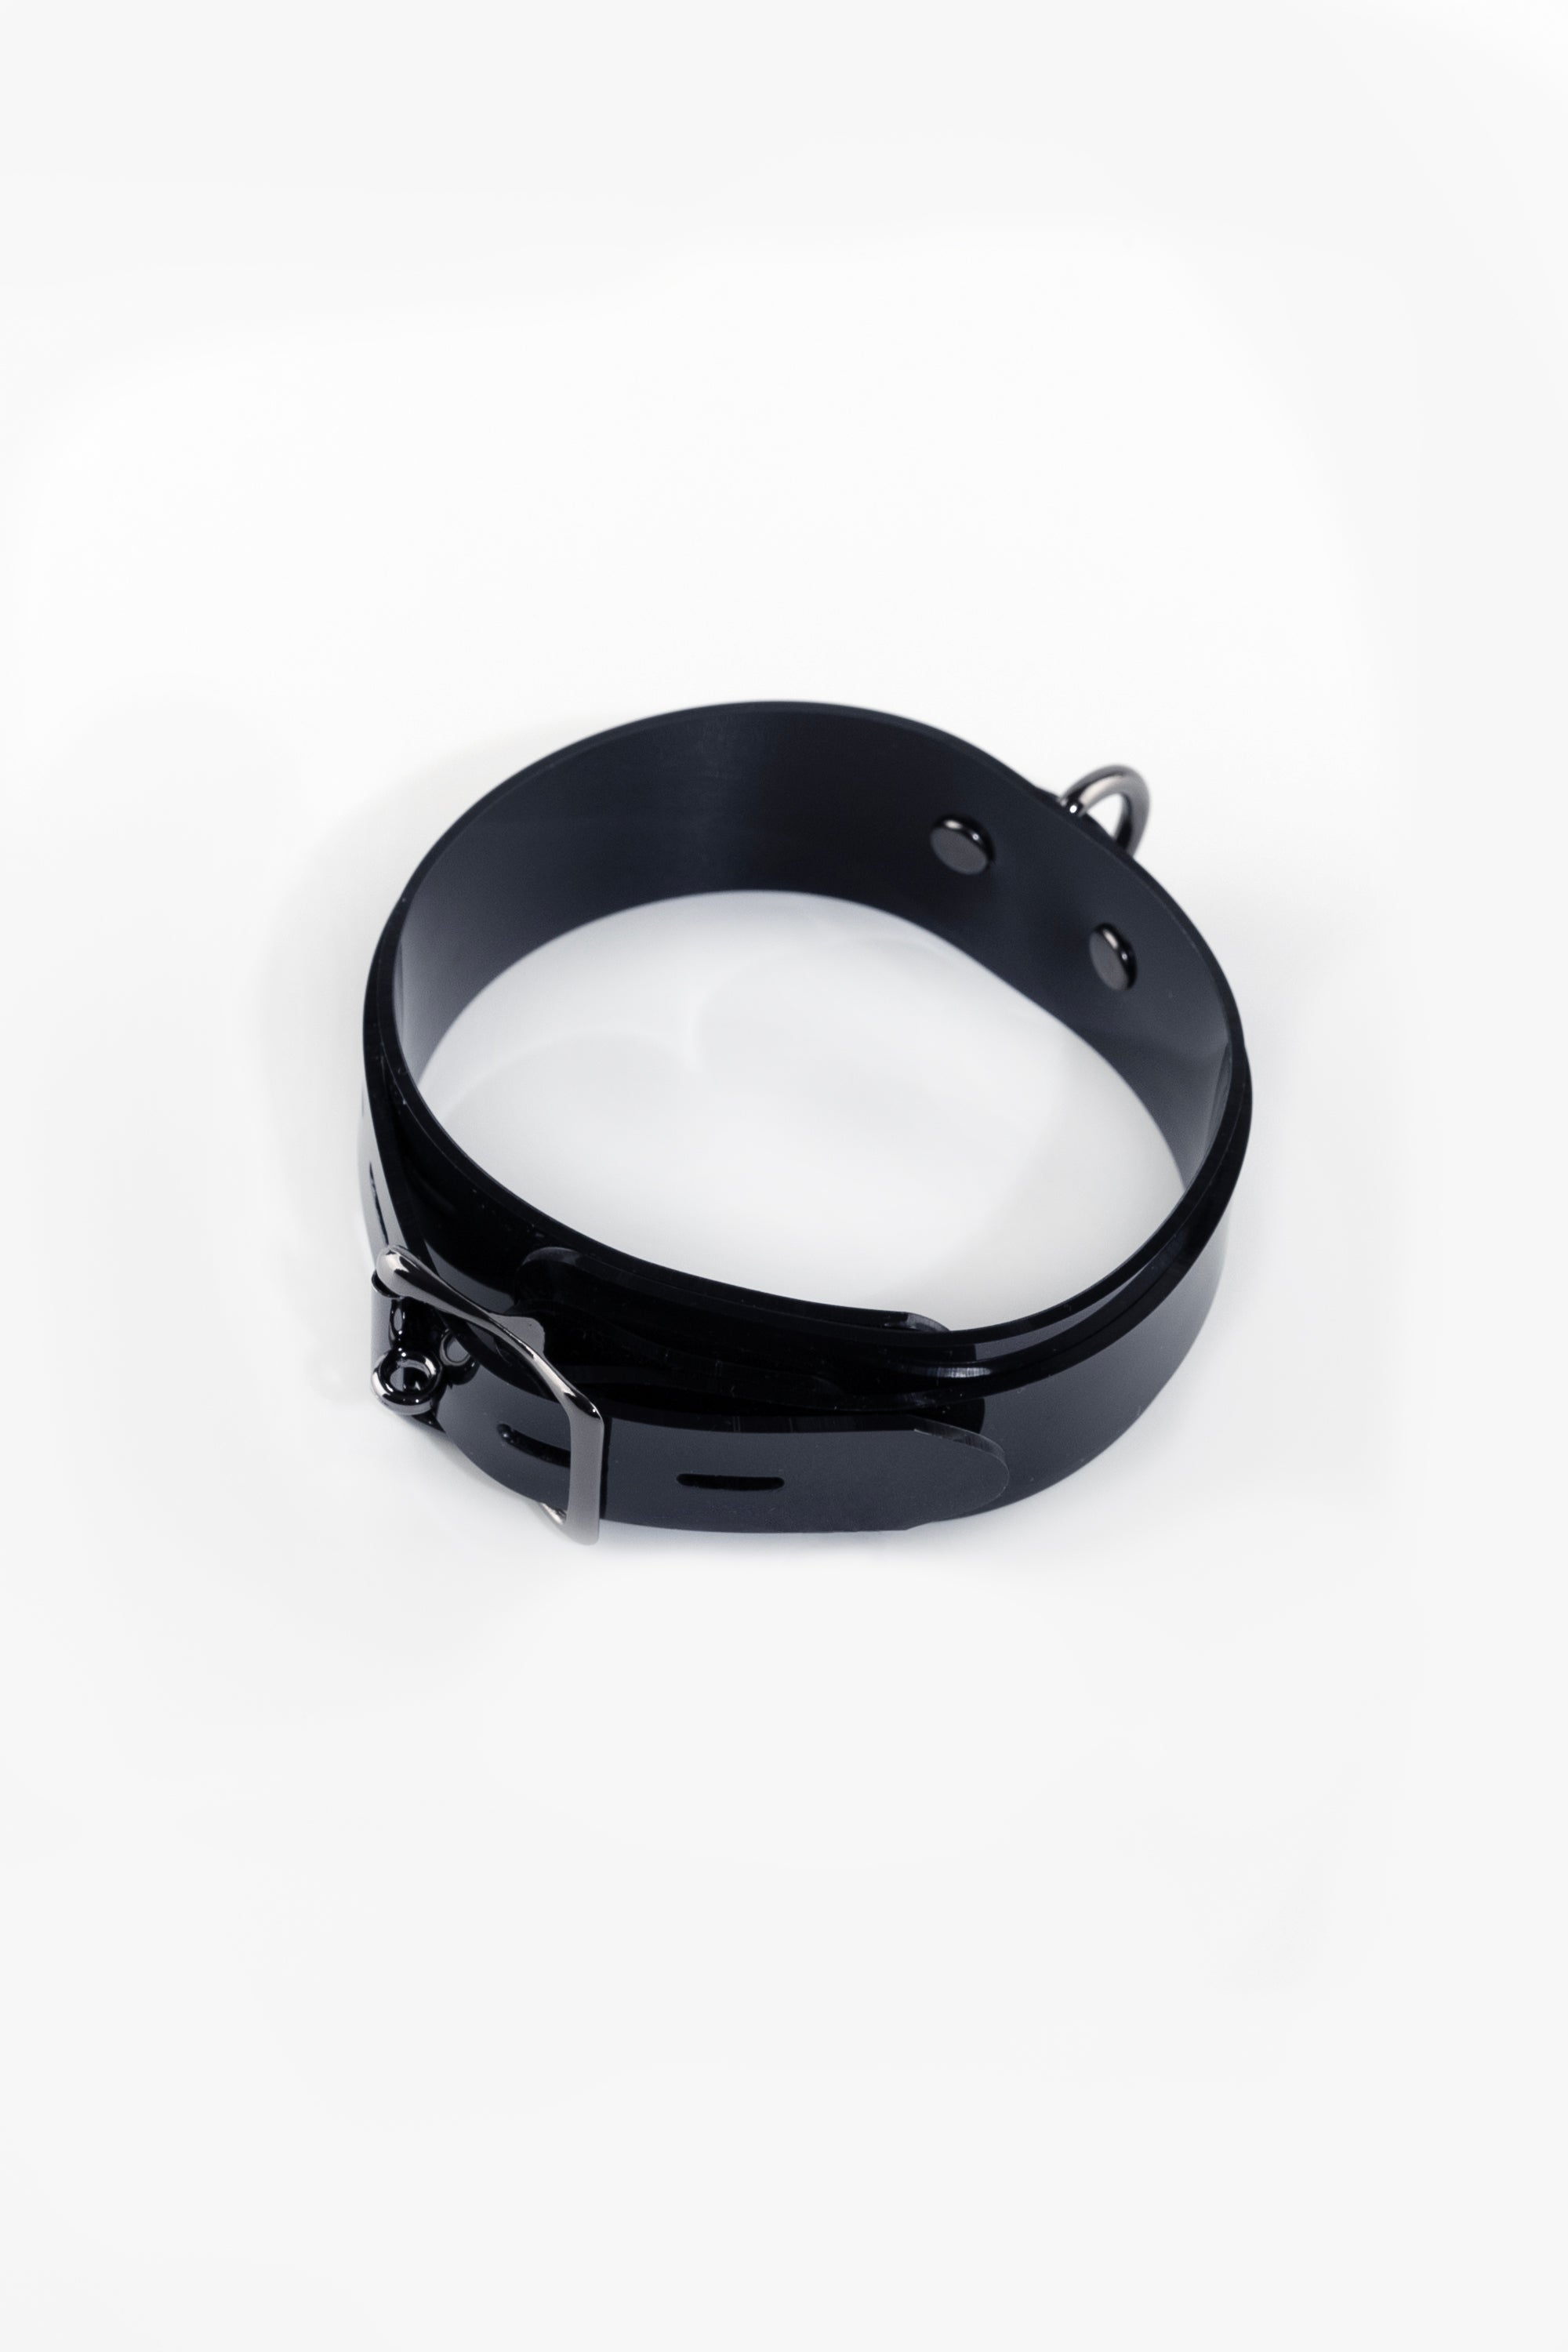 Lockable choker with D-ring, black/black